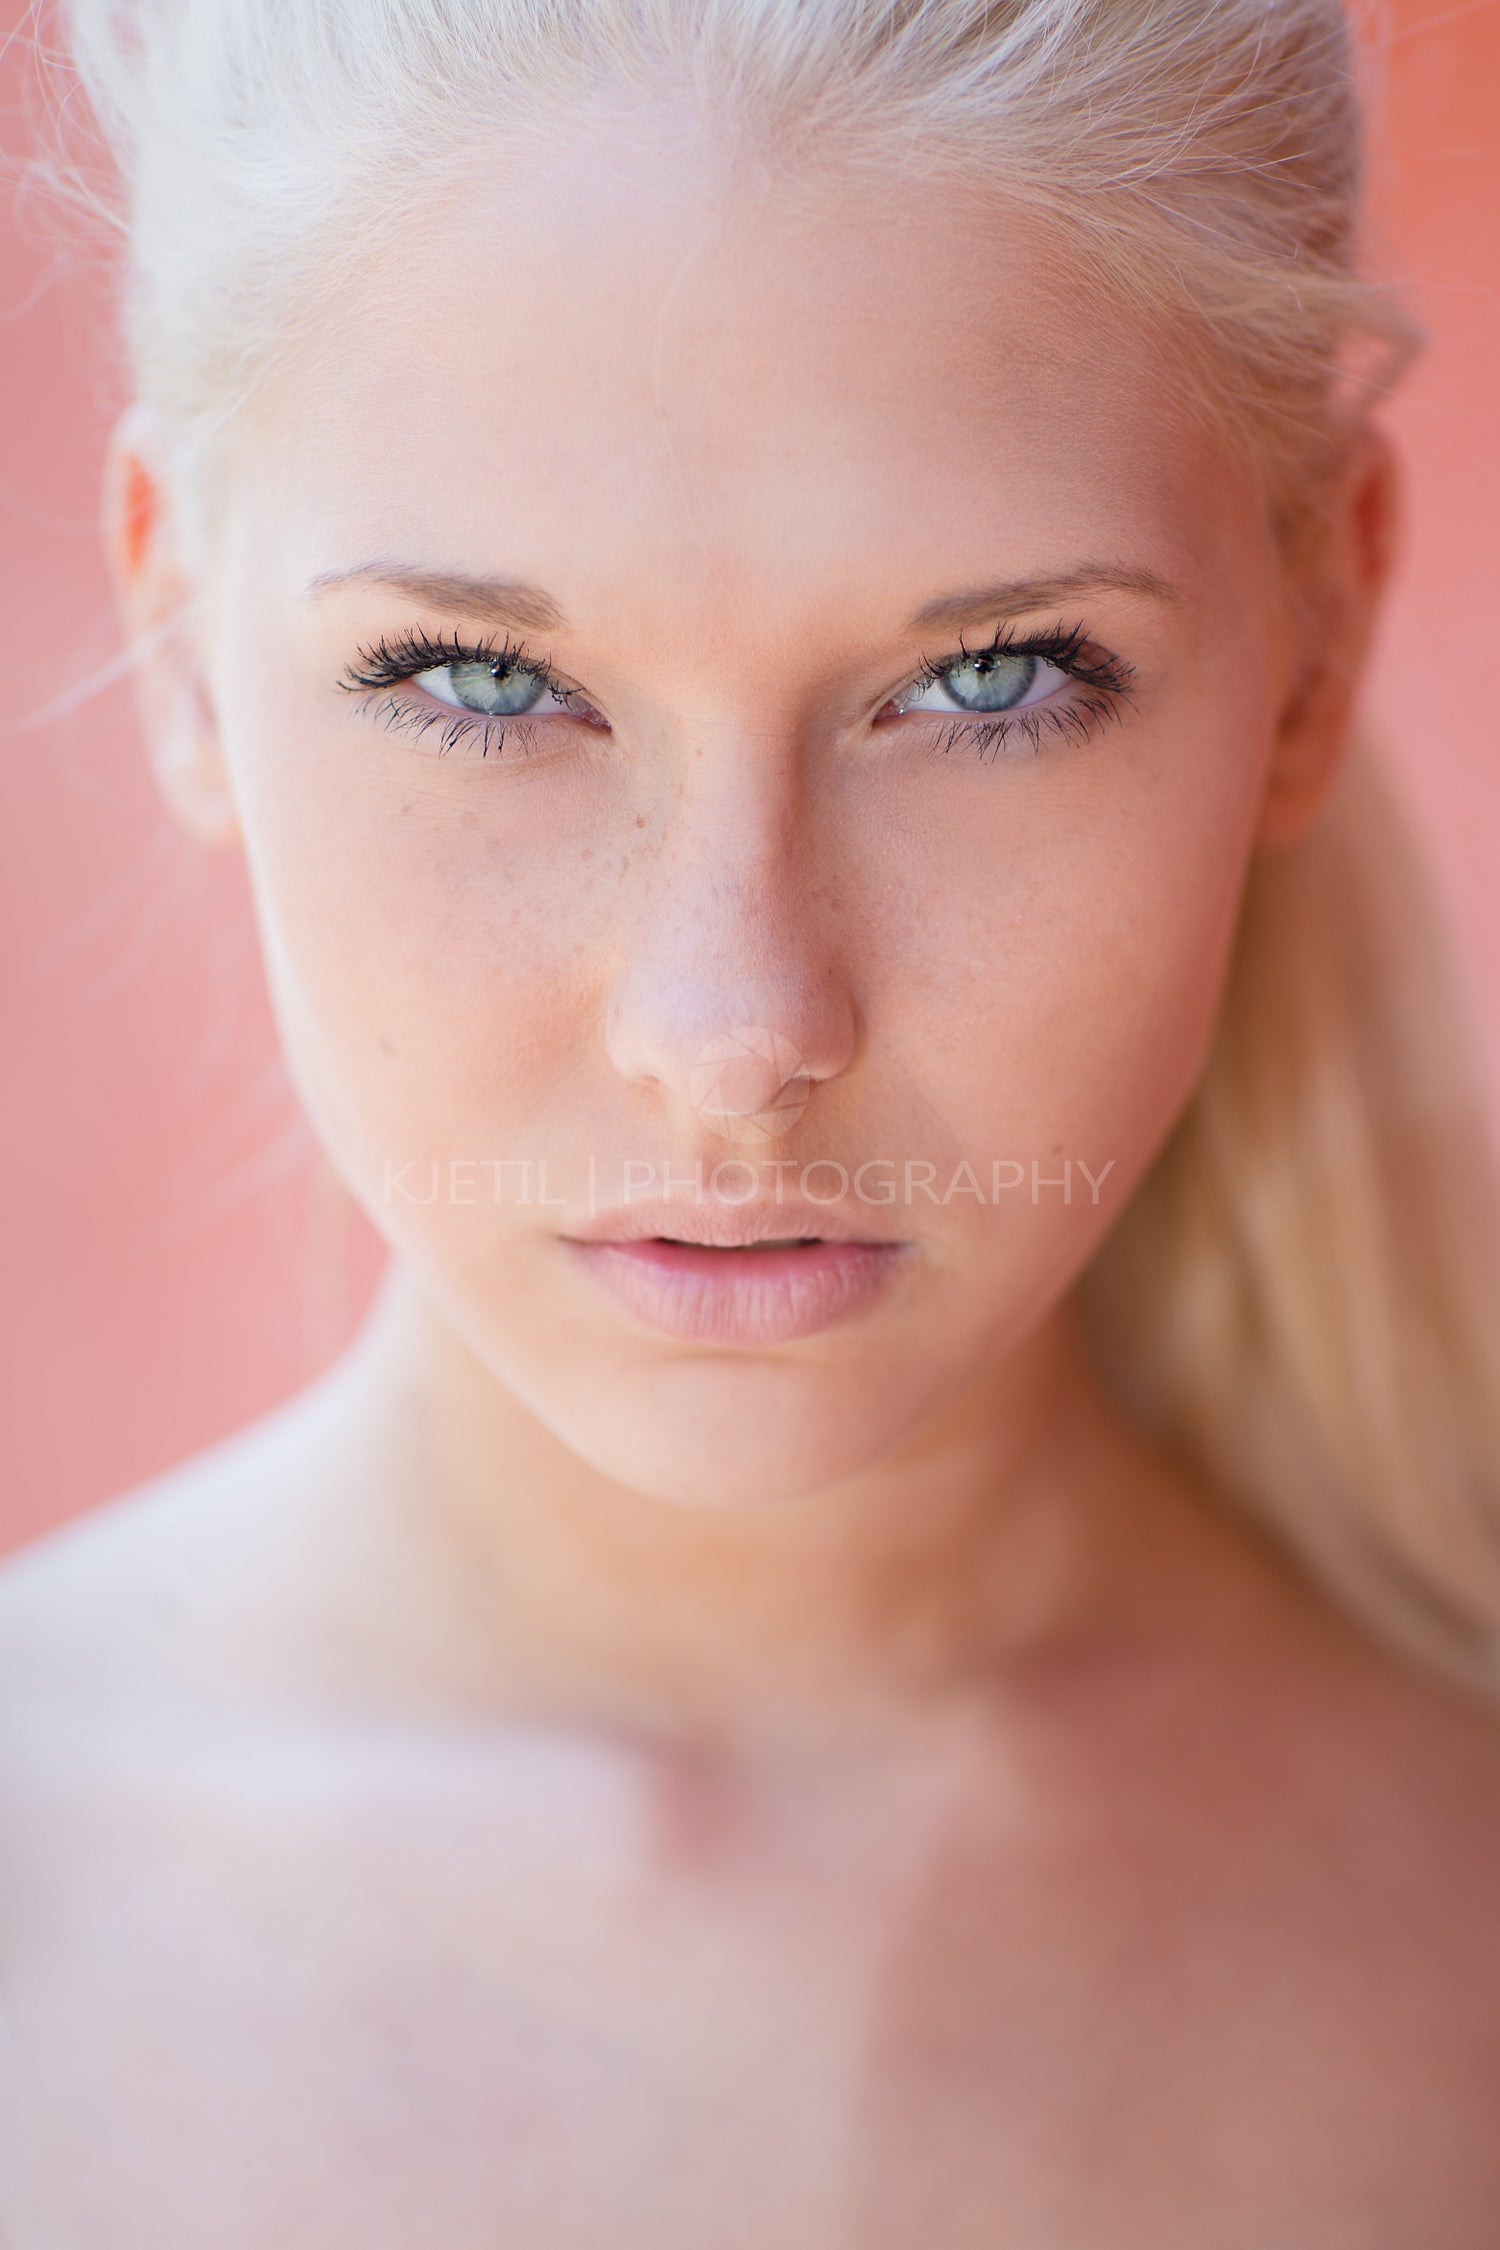 Attractive blonde teen face portrait